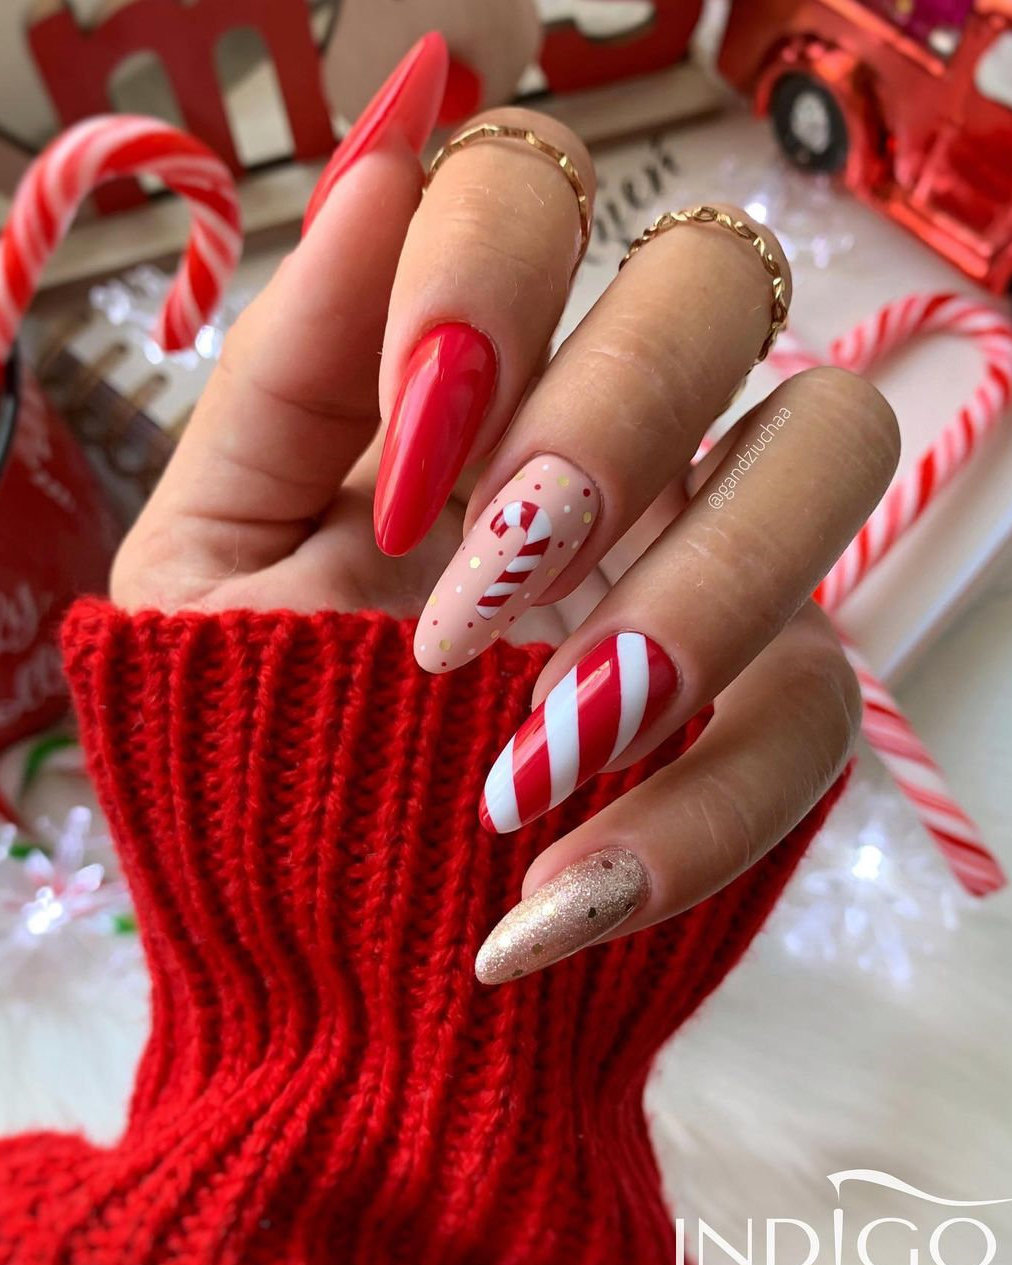 red and white nails christmas, winter nails 2021 trends, cute candy cane nails idea; santa nails design, reindeer nail designs #nailsdesign #christmasnails #nails #holidaynails #winternails